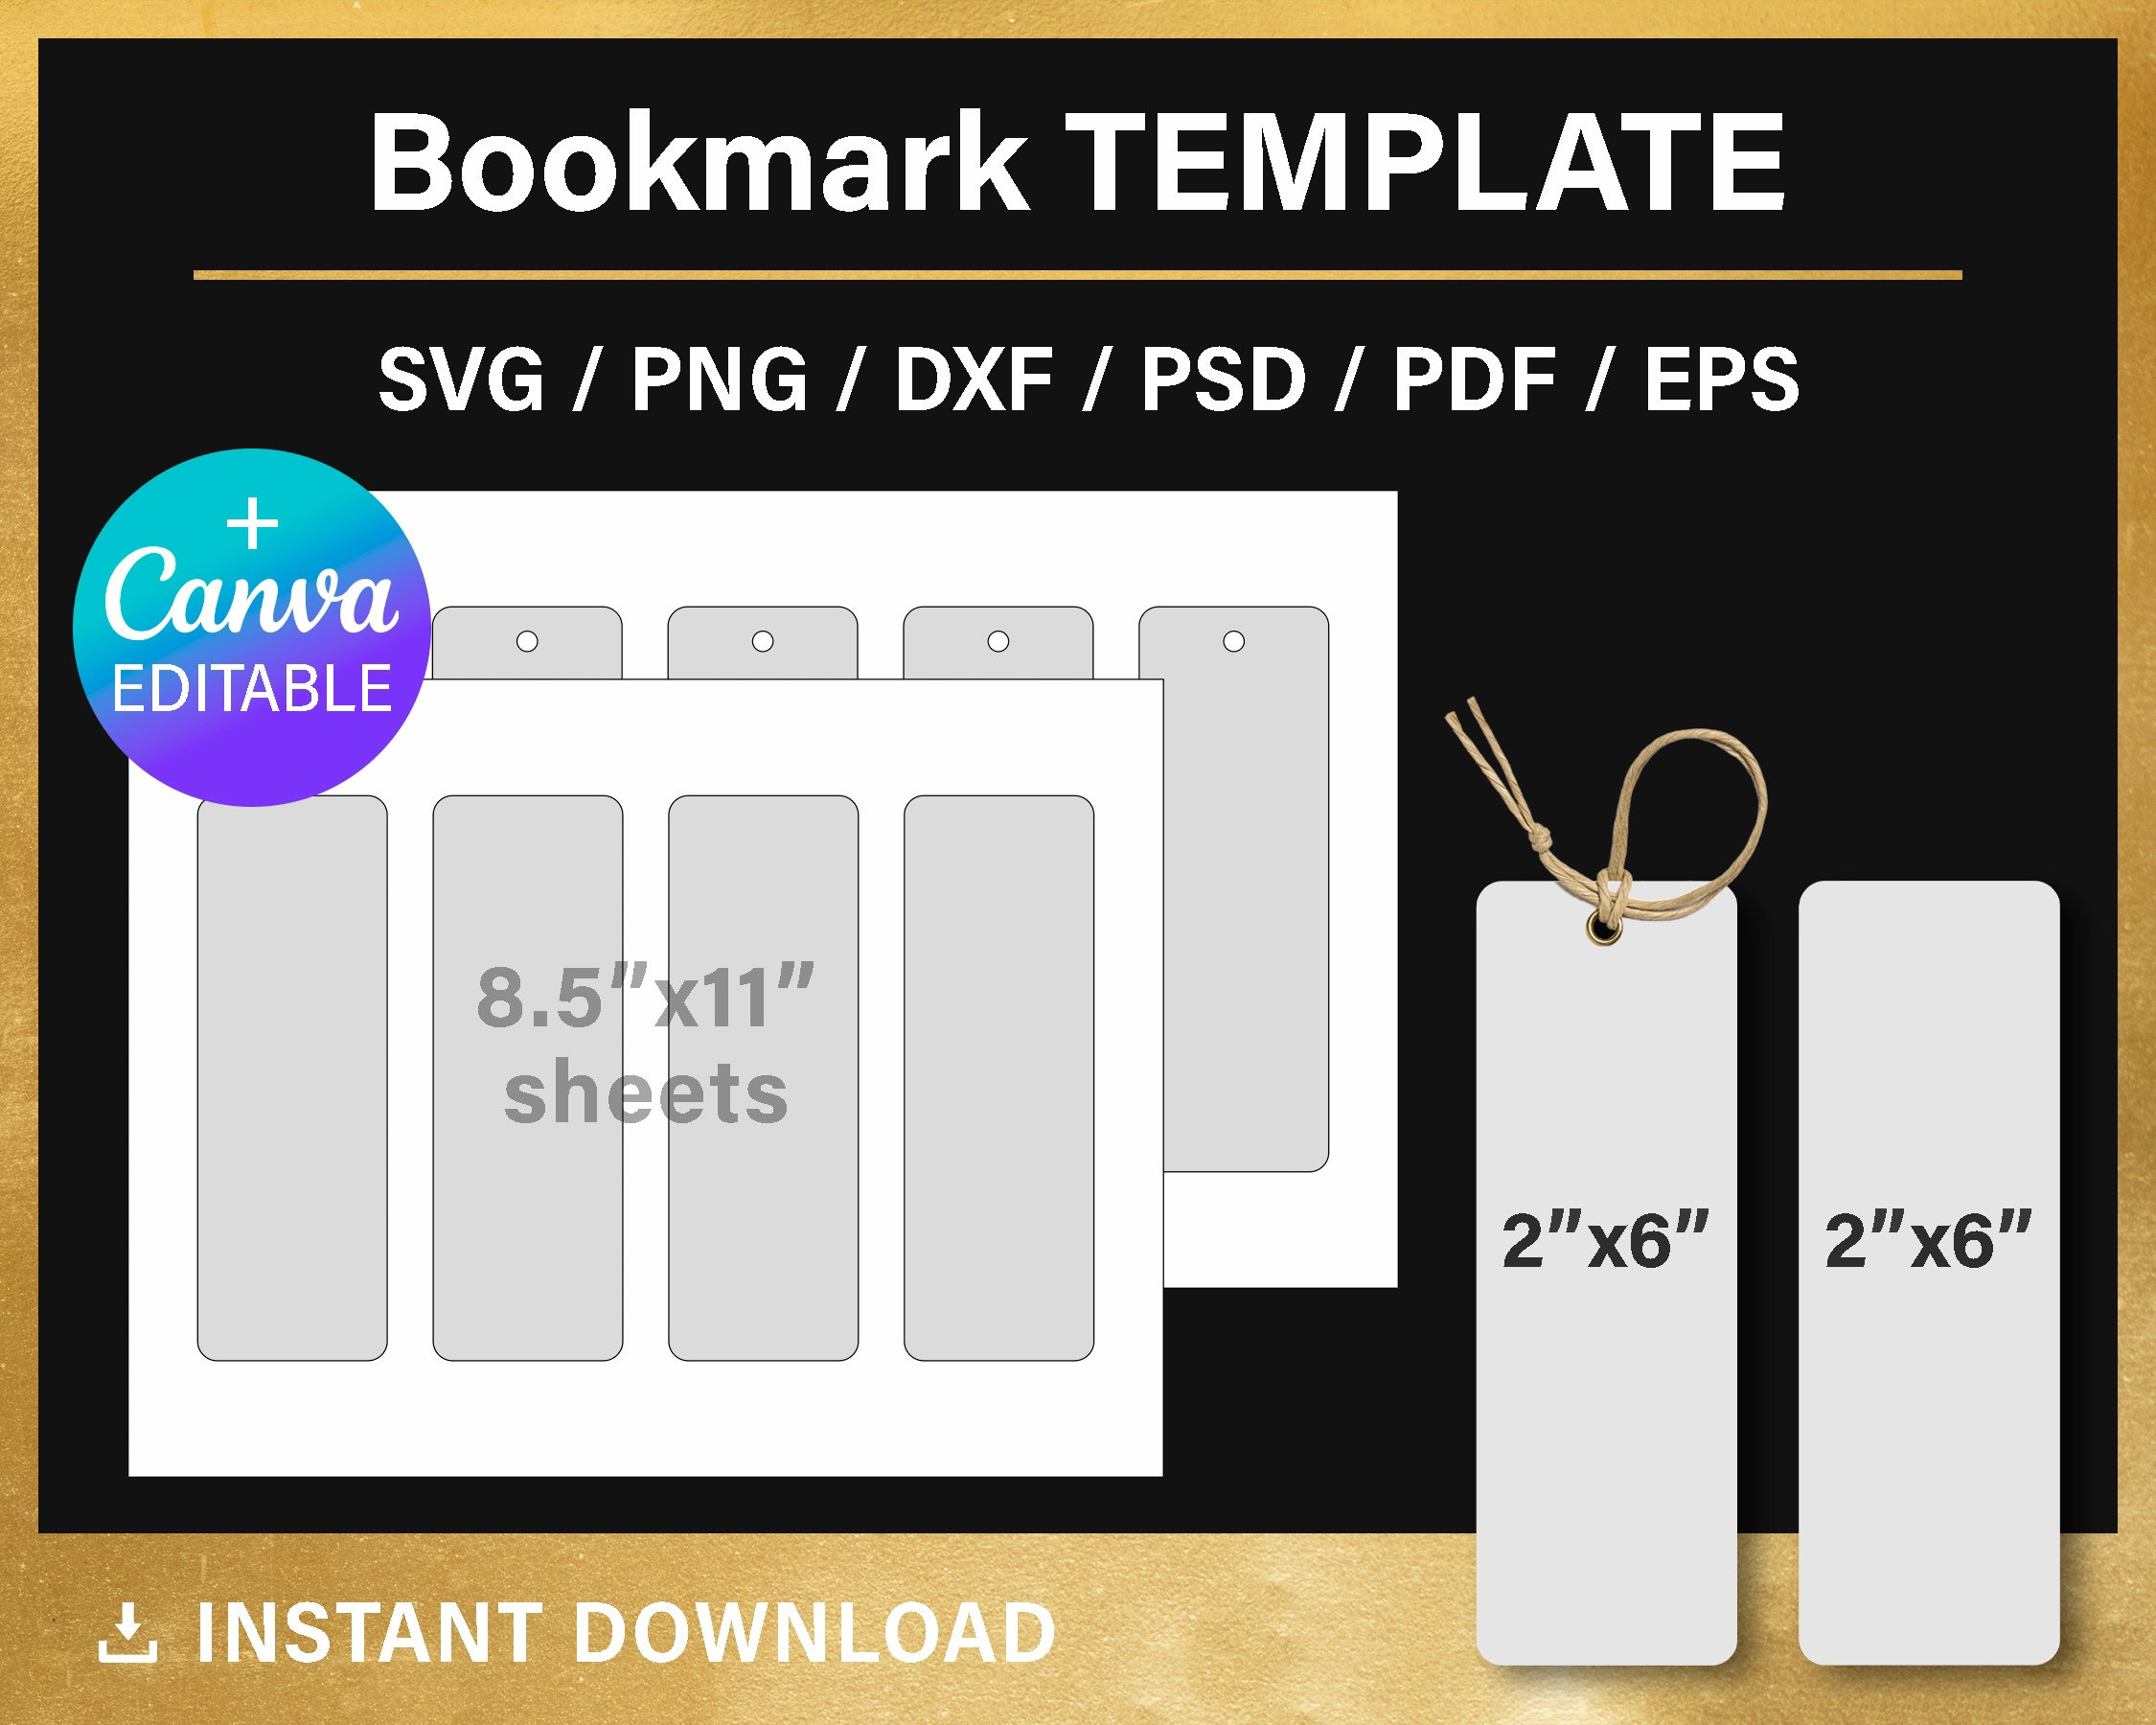 Blank bookmark template 2